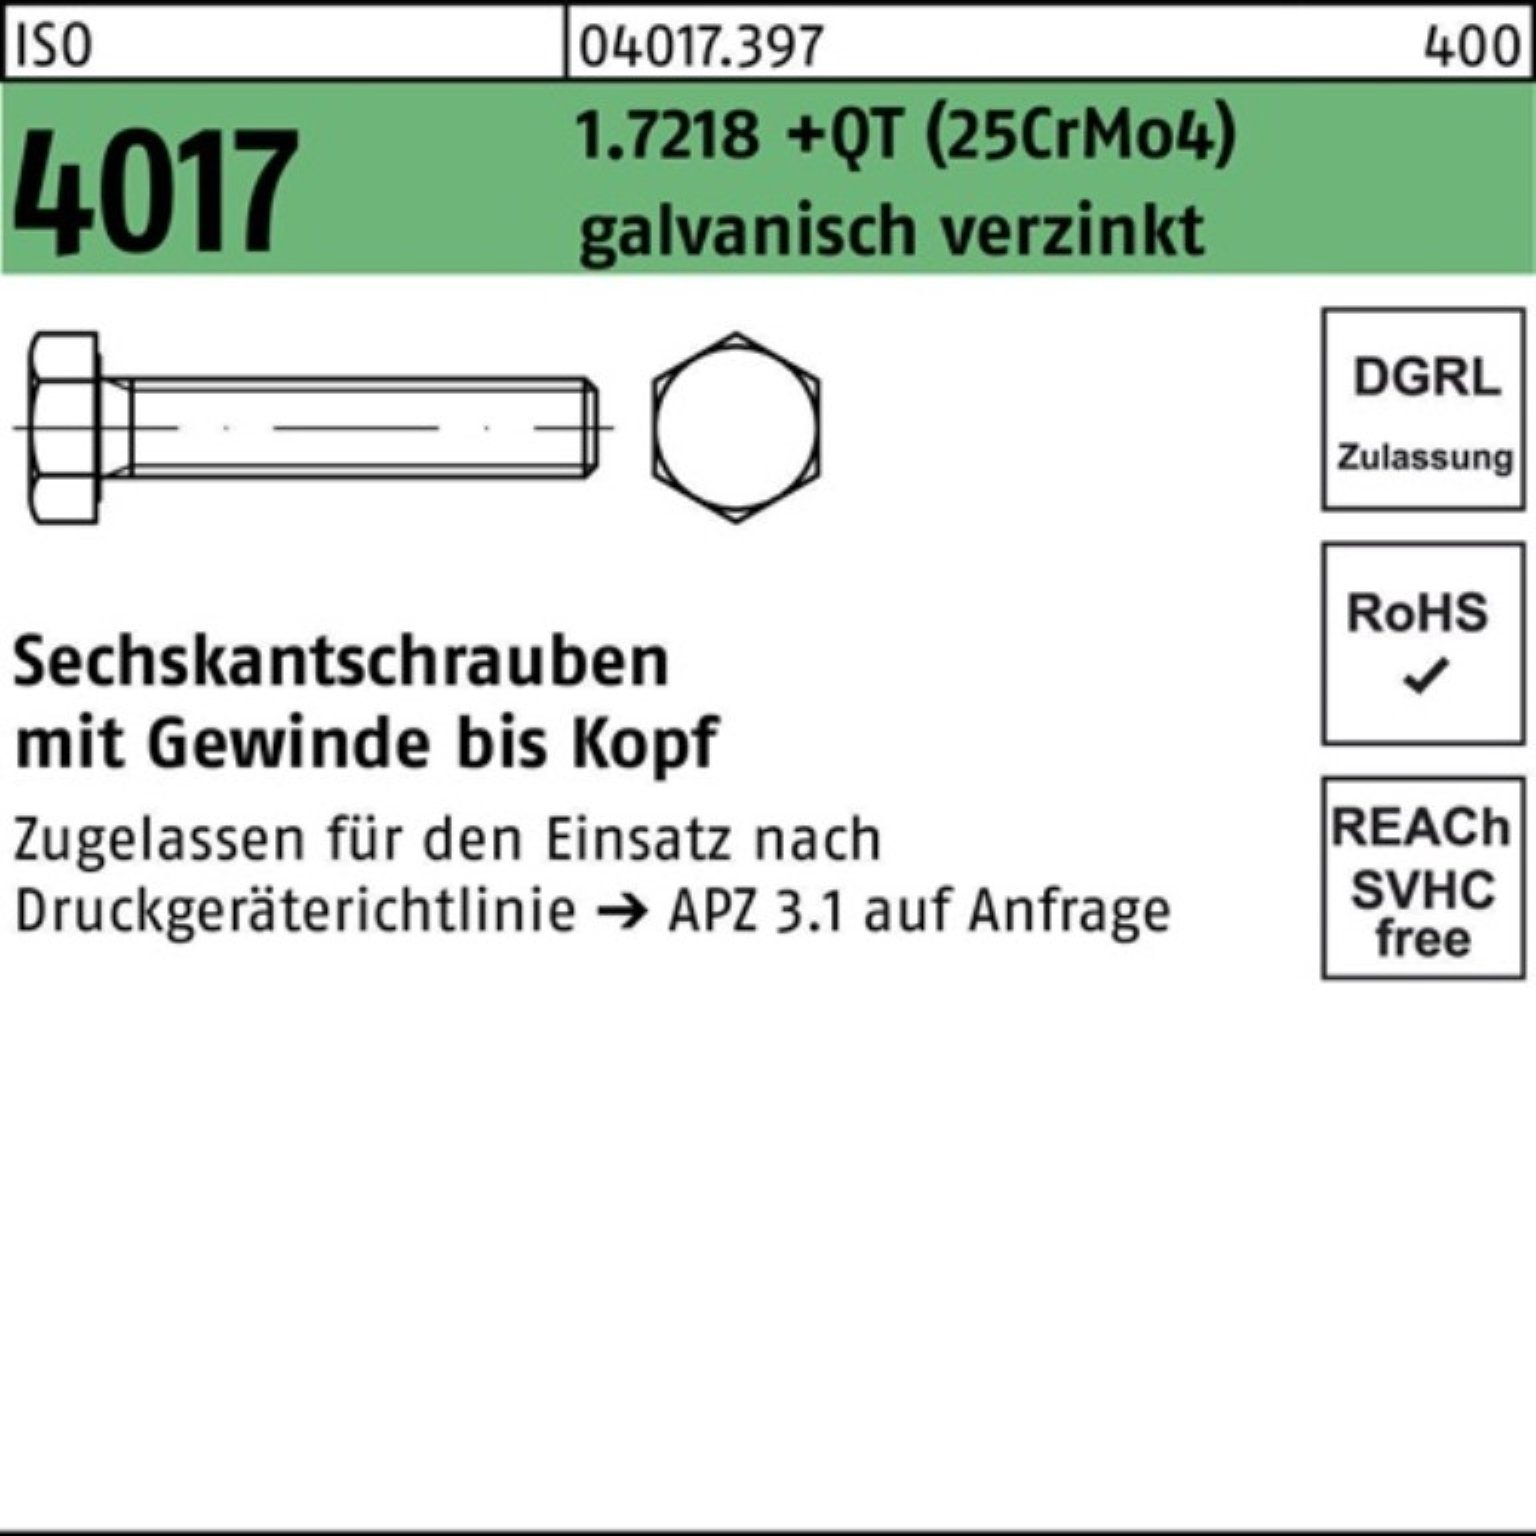 Bufab Sechskantschraube 100er Pack VG 1.7218 ISO g Sechskantschraube (25CrMo4) M30x90 4017 +QT